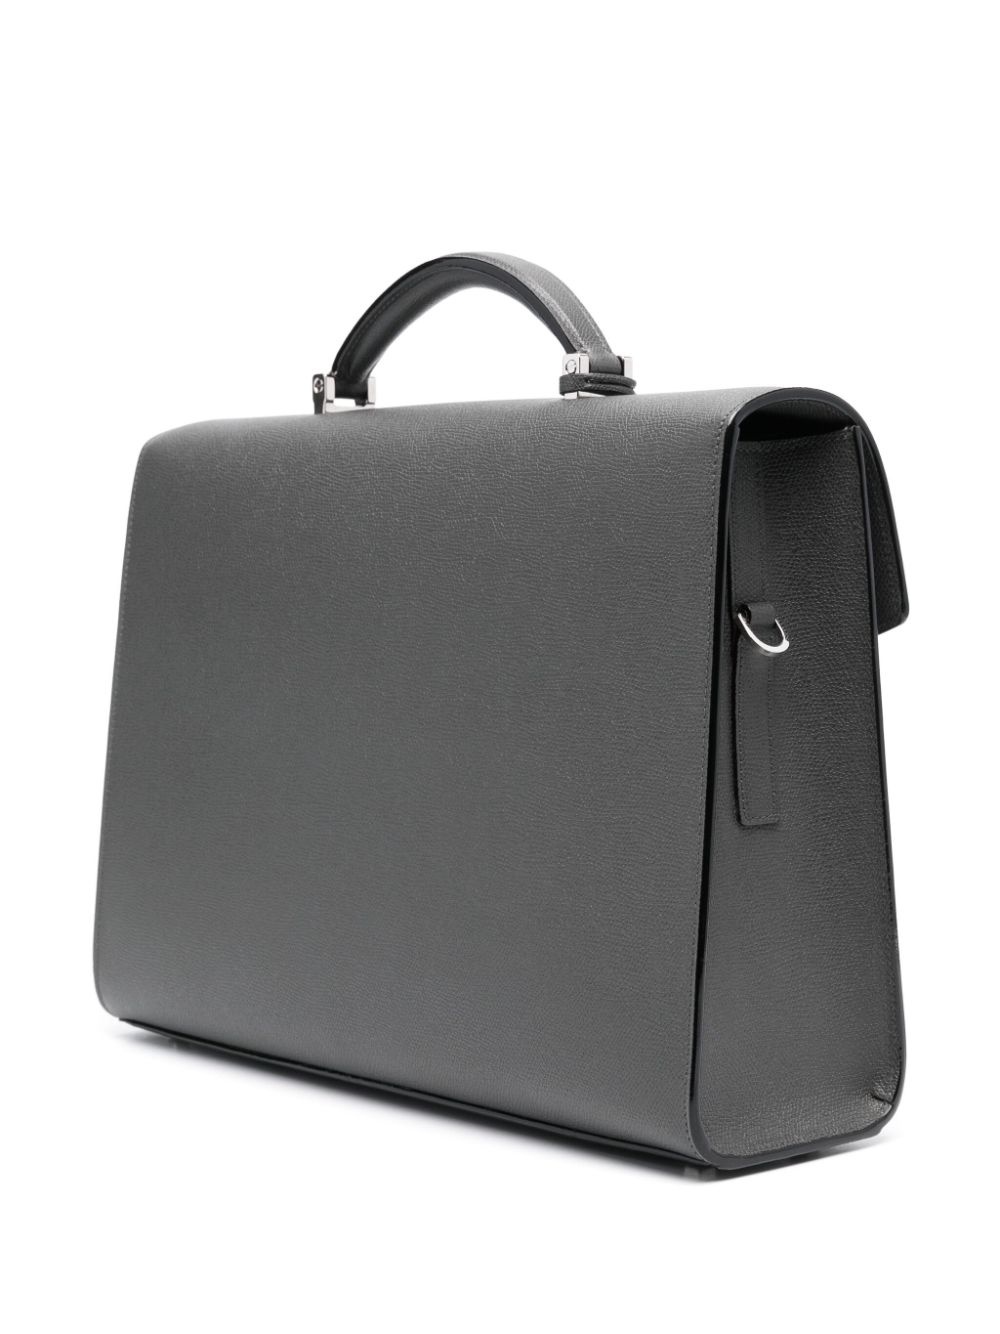 Iside leather handbag - 2